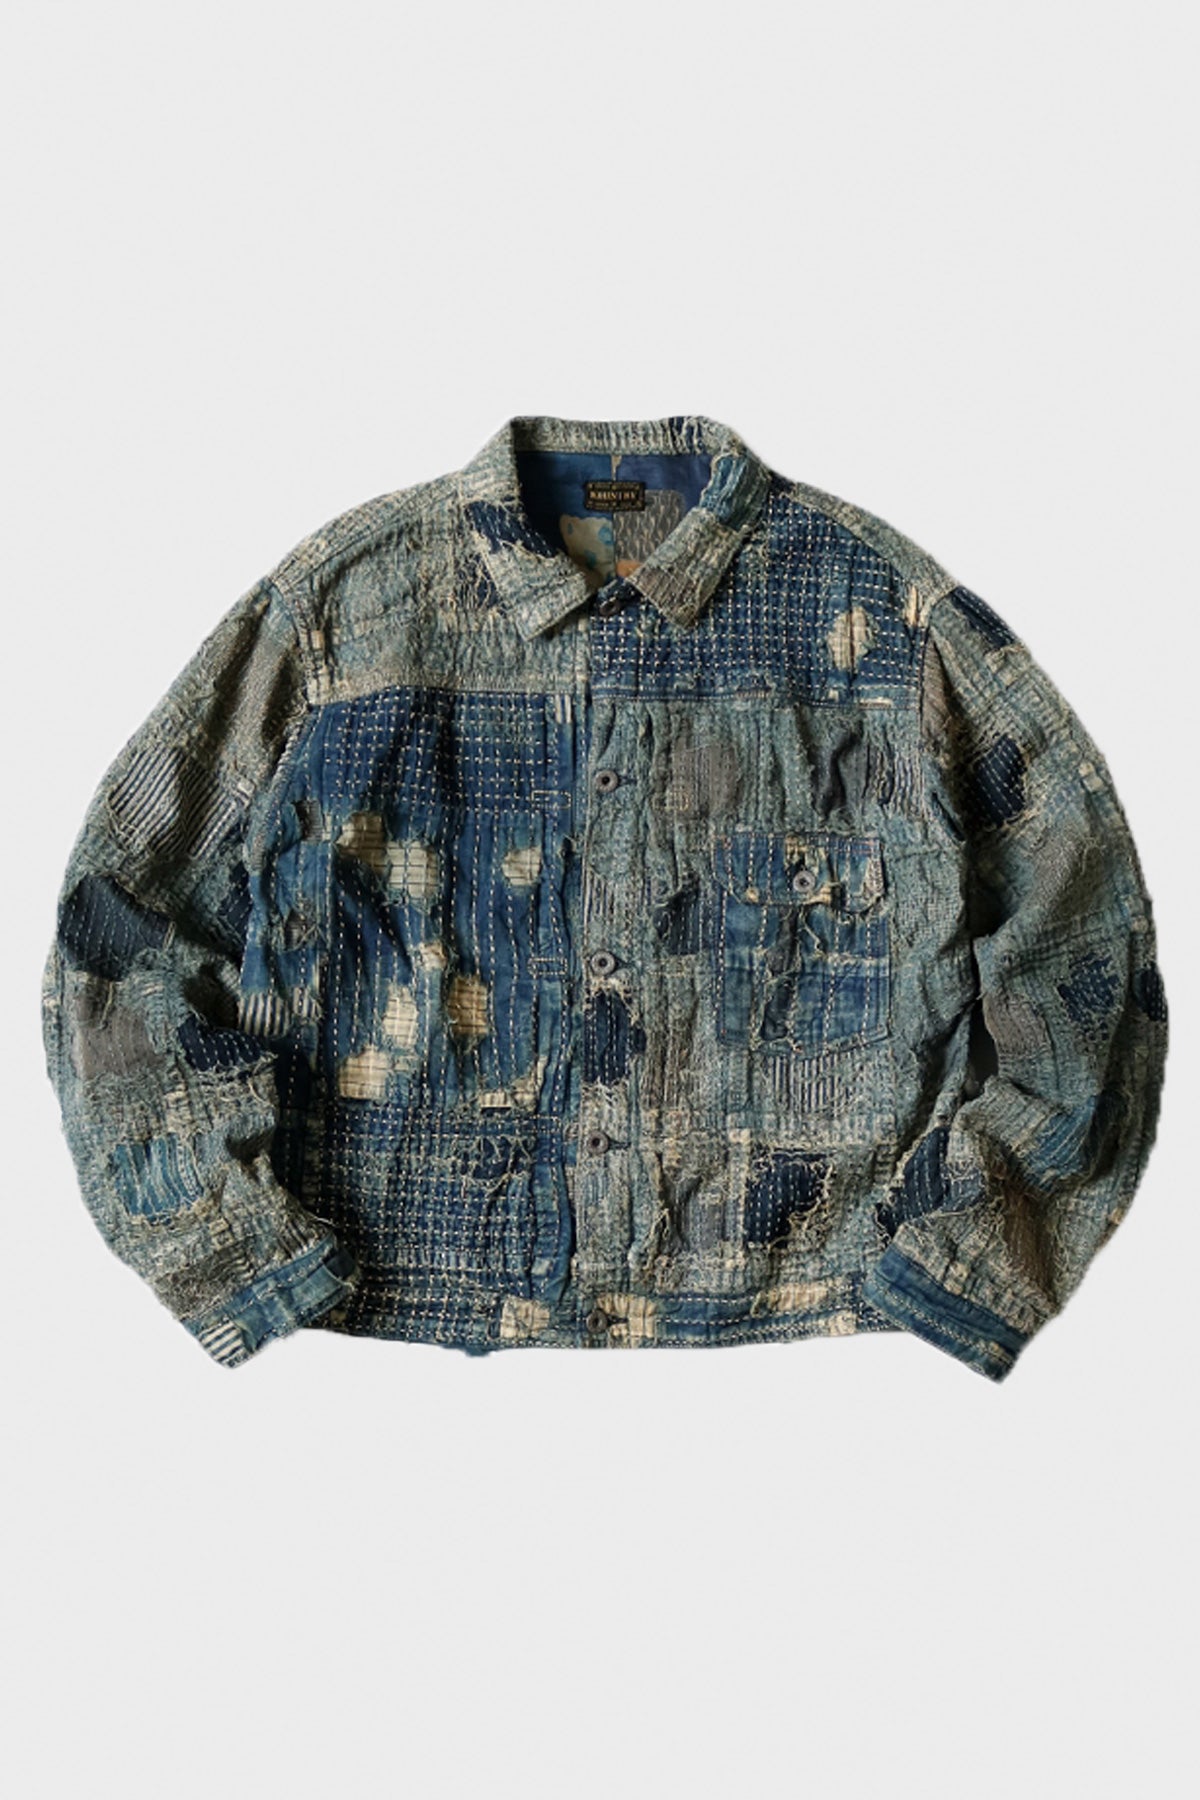 Kapital Boro Patchwork Jacket - Blue Outerwear, Clothing - WKAPL20008